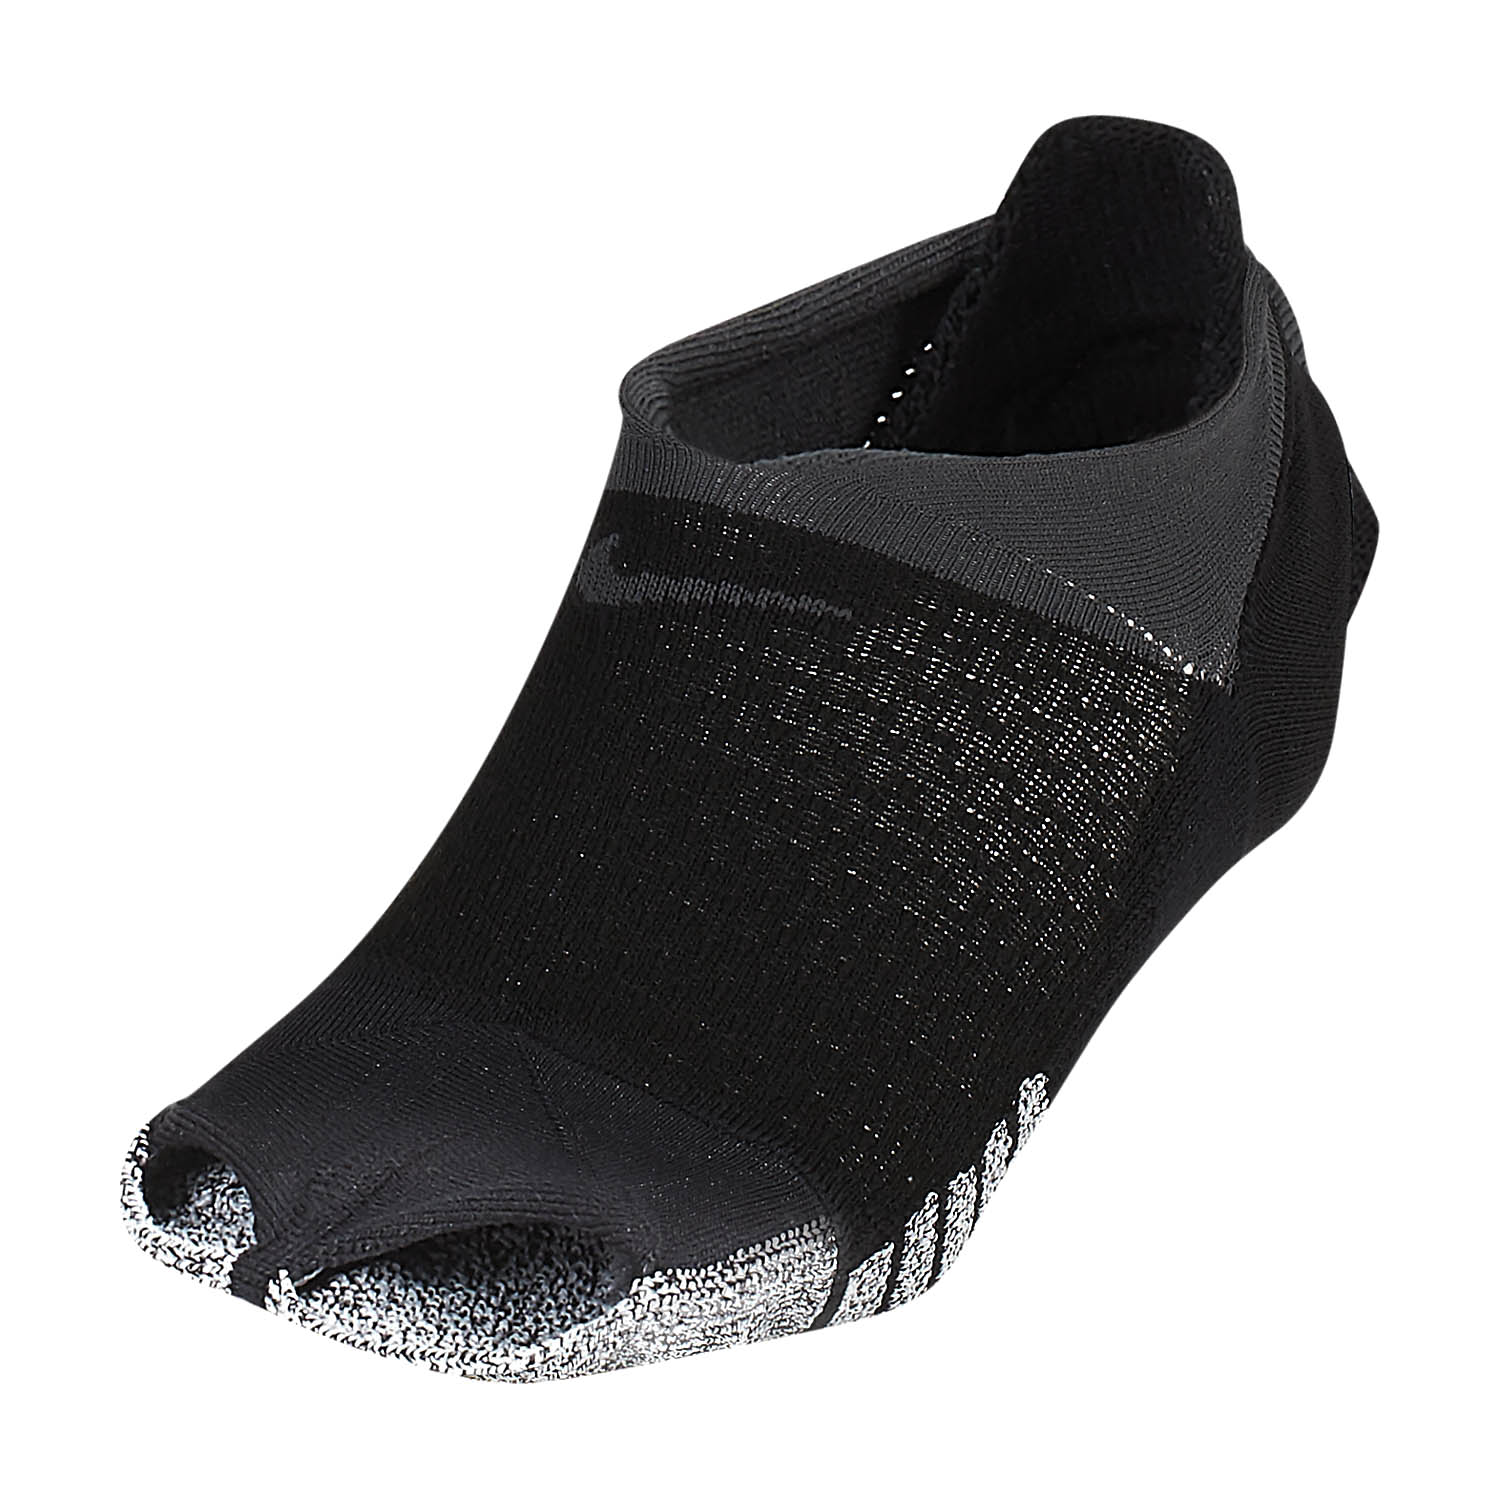 Nike Studio Socks - Black/Anthracite